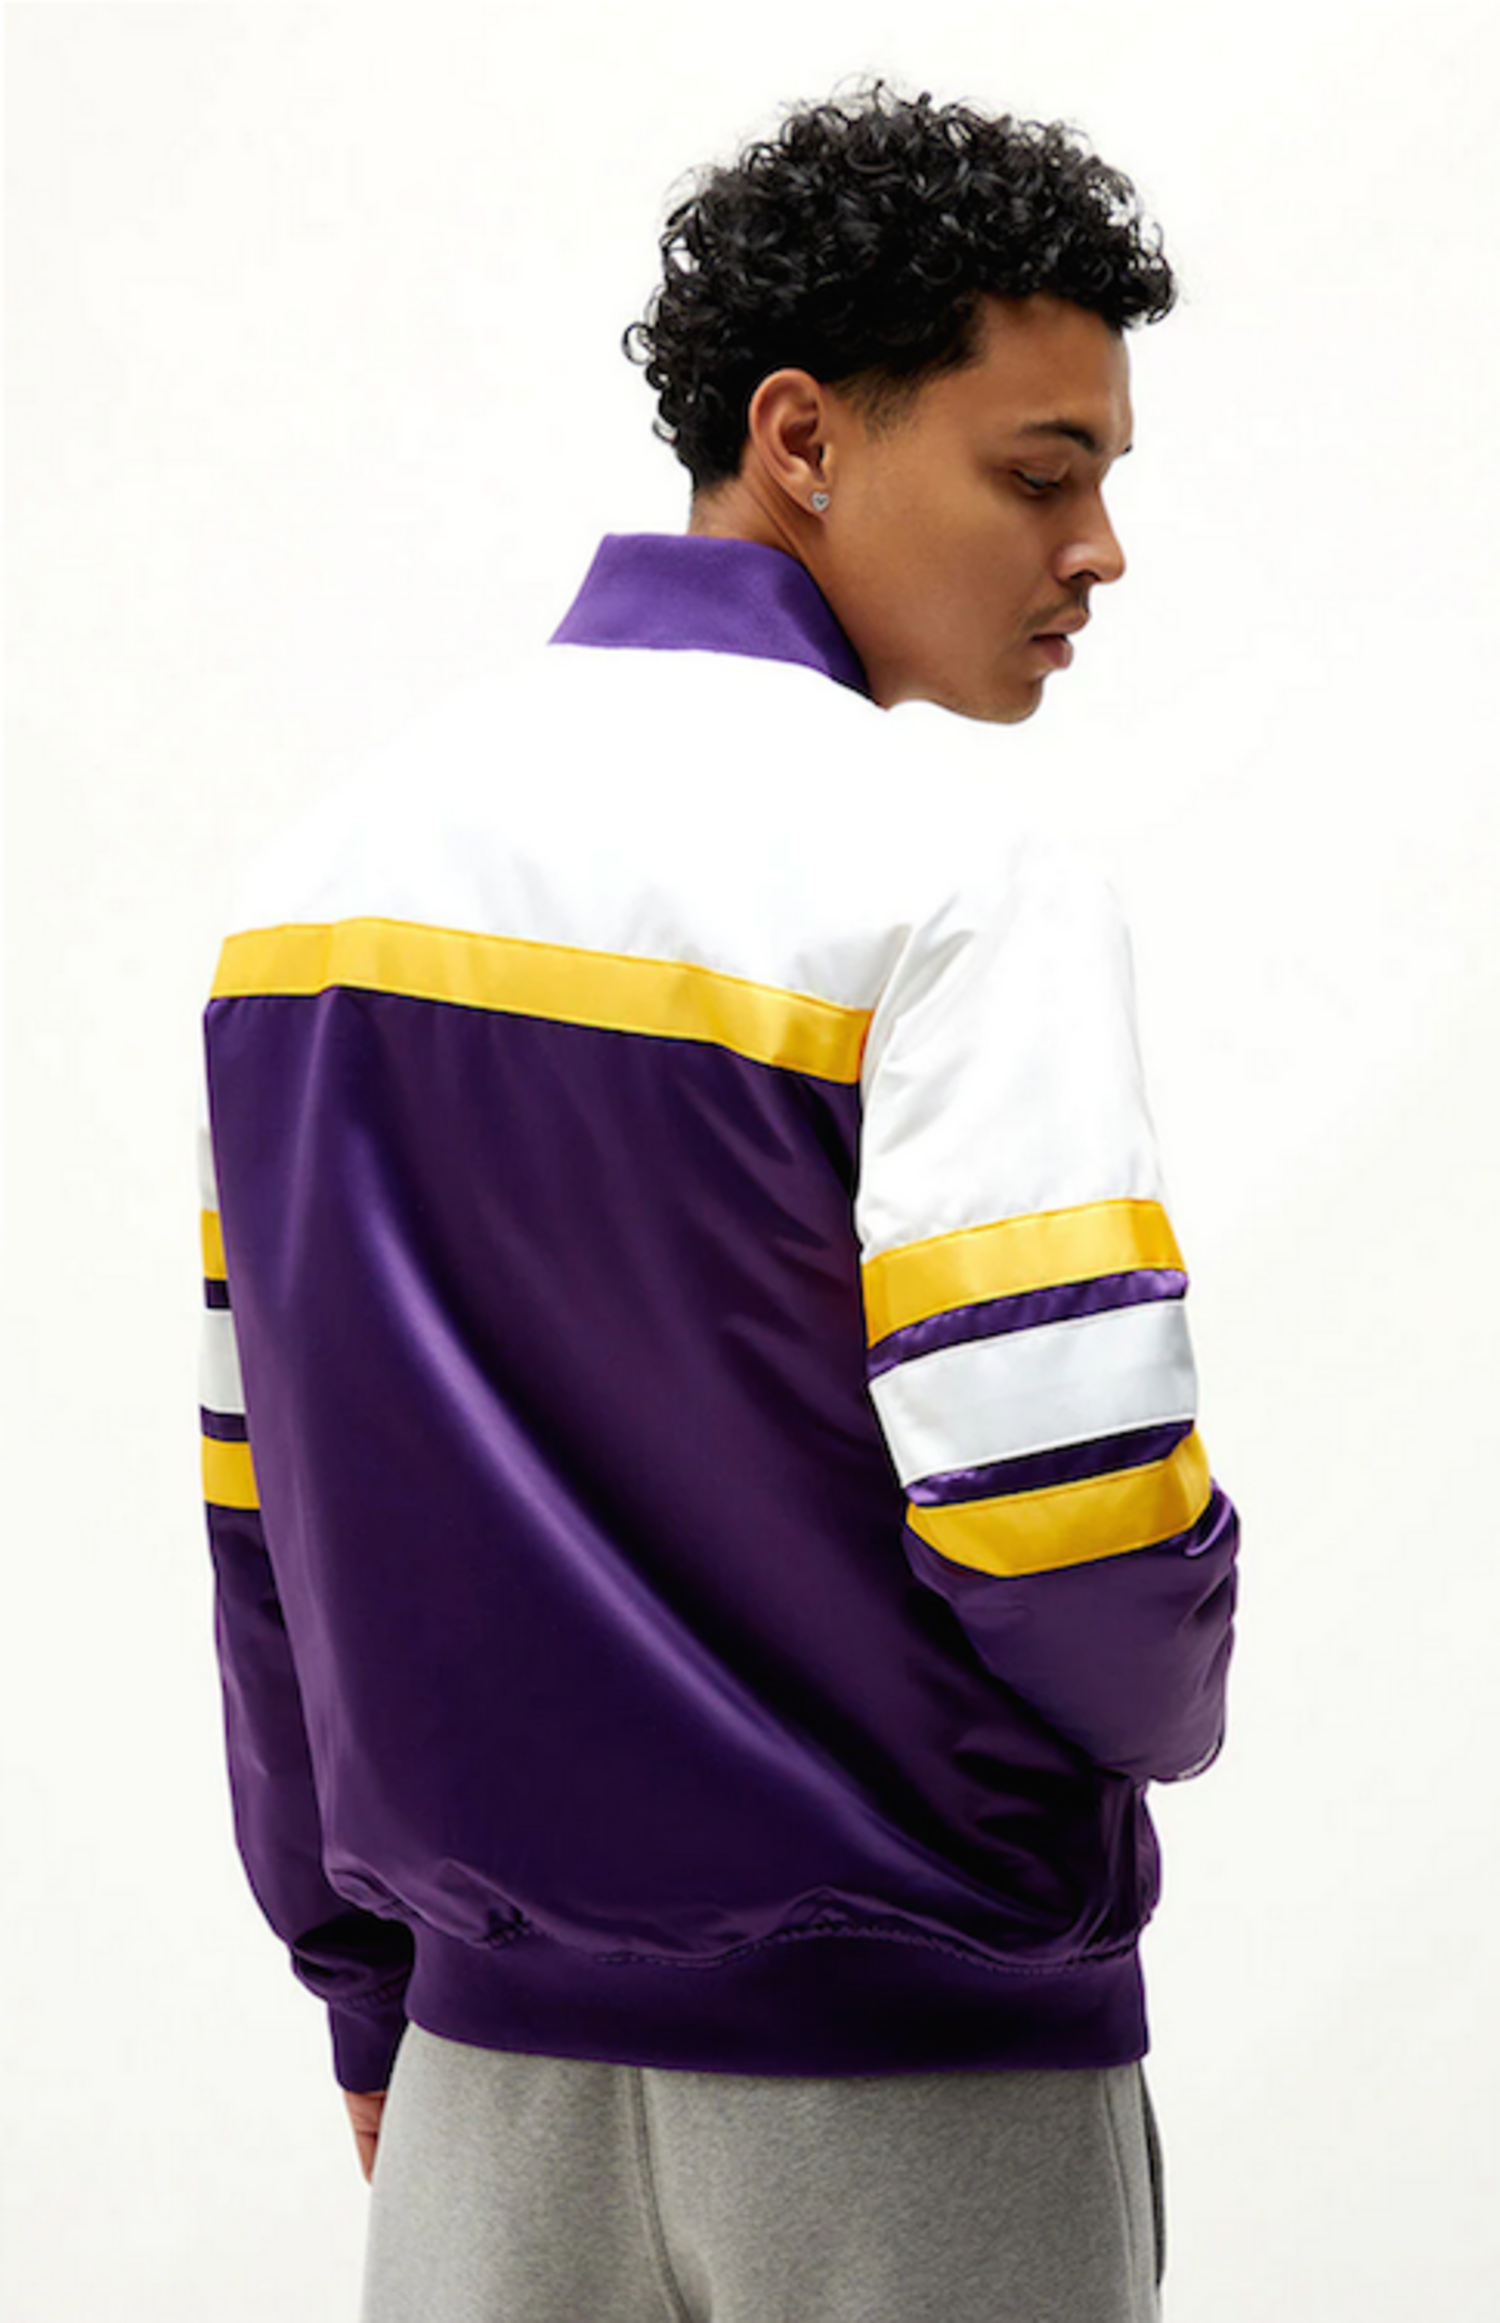 NBA LA Lakers Black and White Varsity Jacket